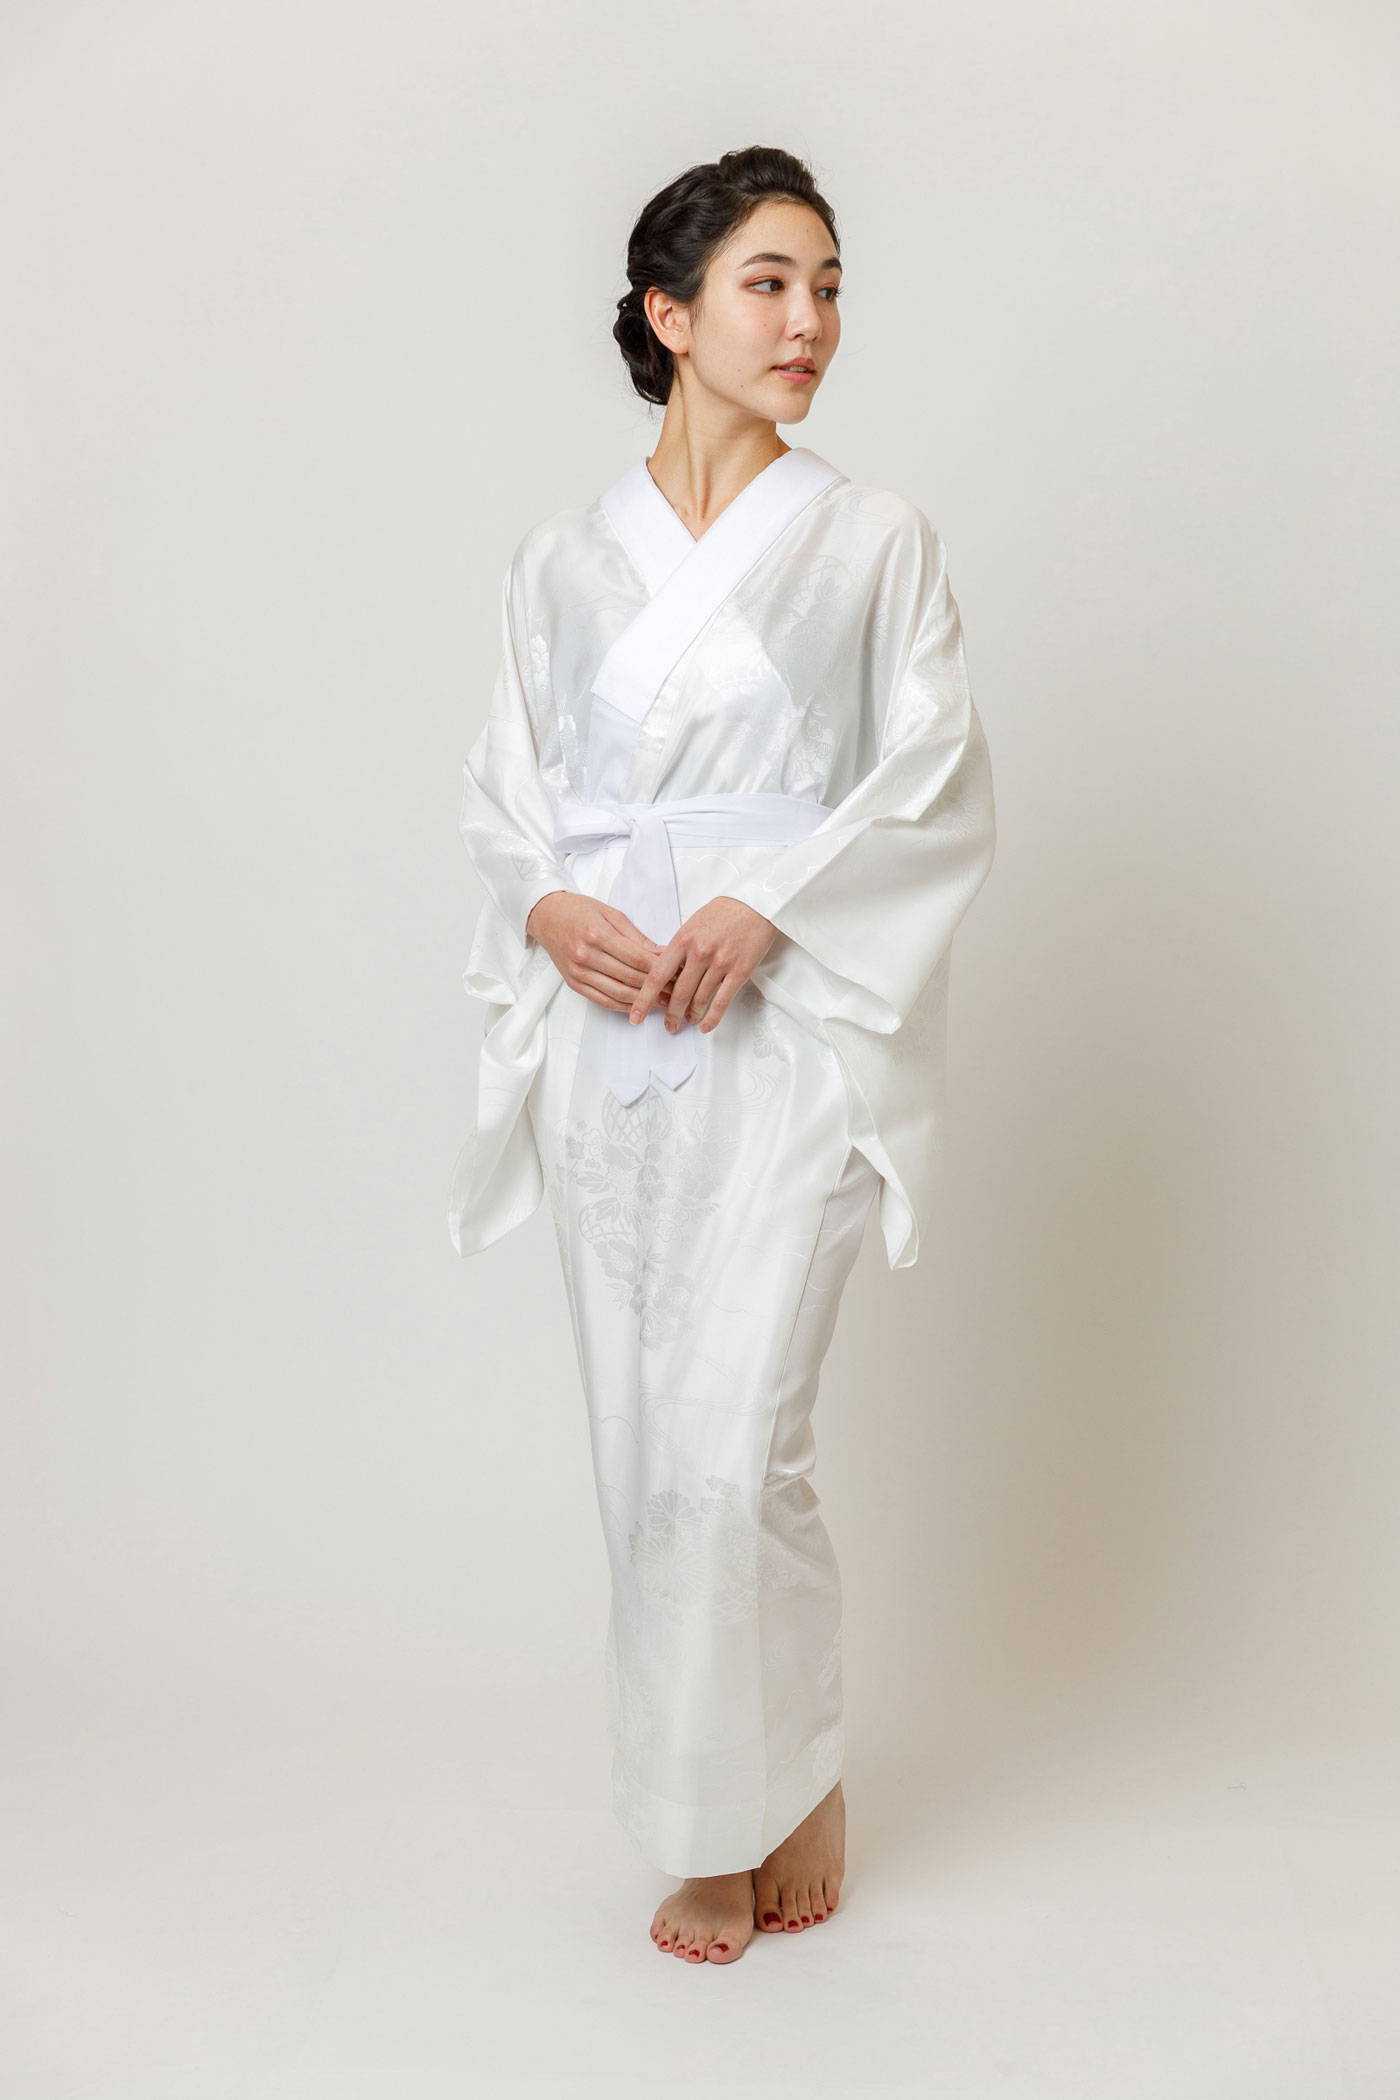 JP NET Kimono Hypertext: A Man's Kimono - Yukata